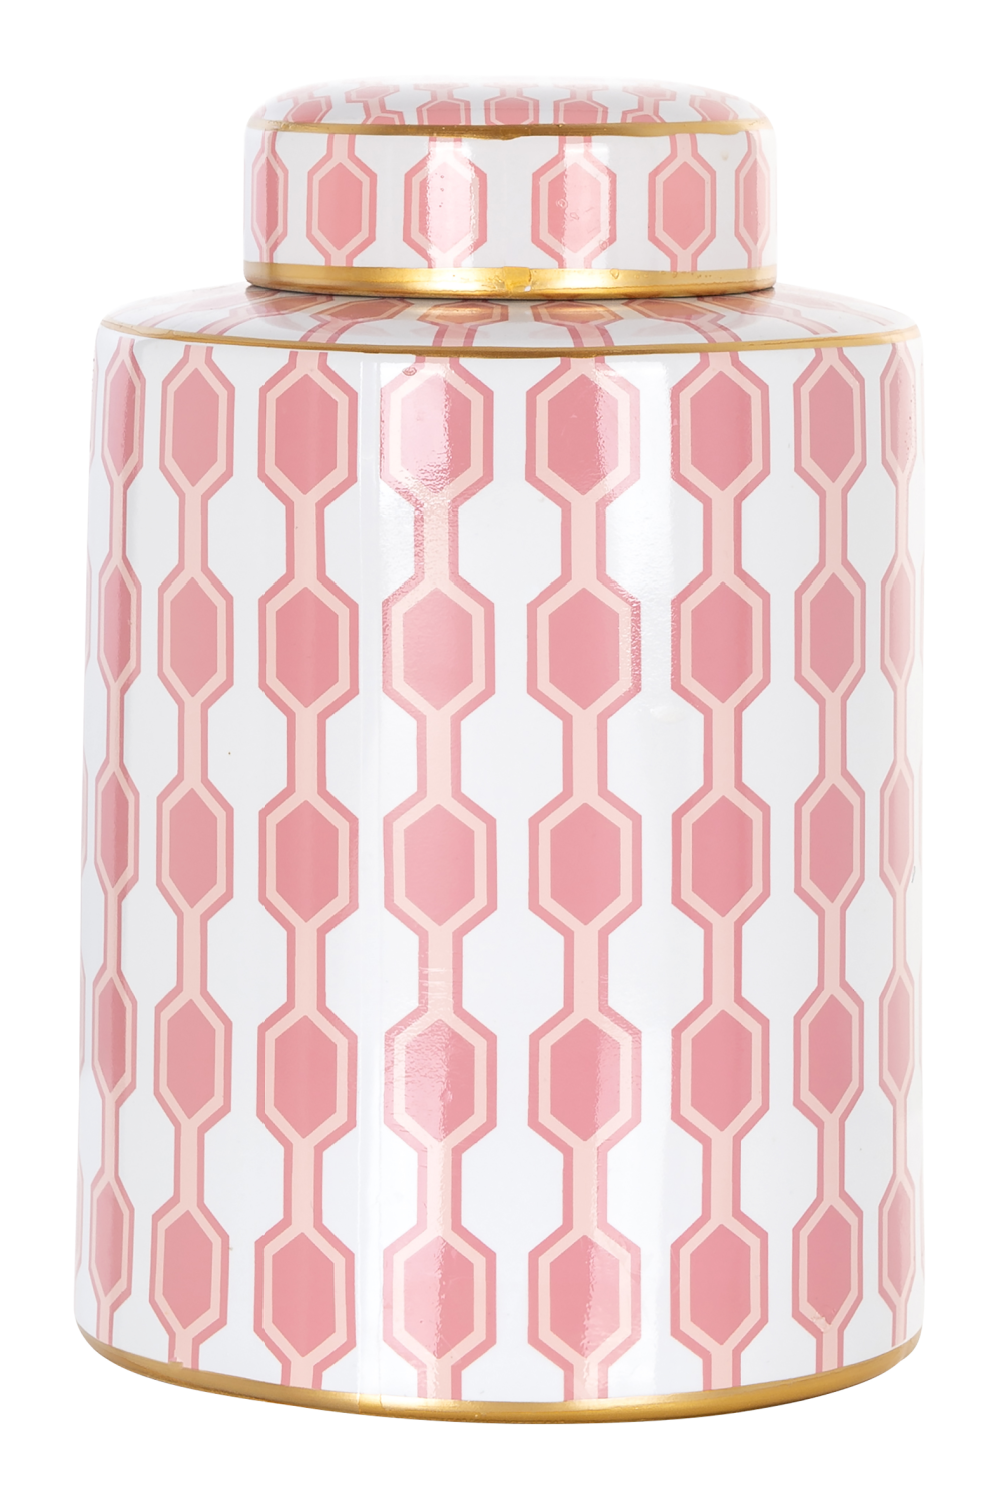 Pink Geometric Print Jar | OROA Aley | Oroa.com